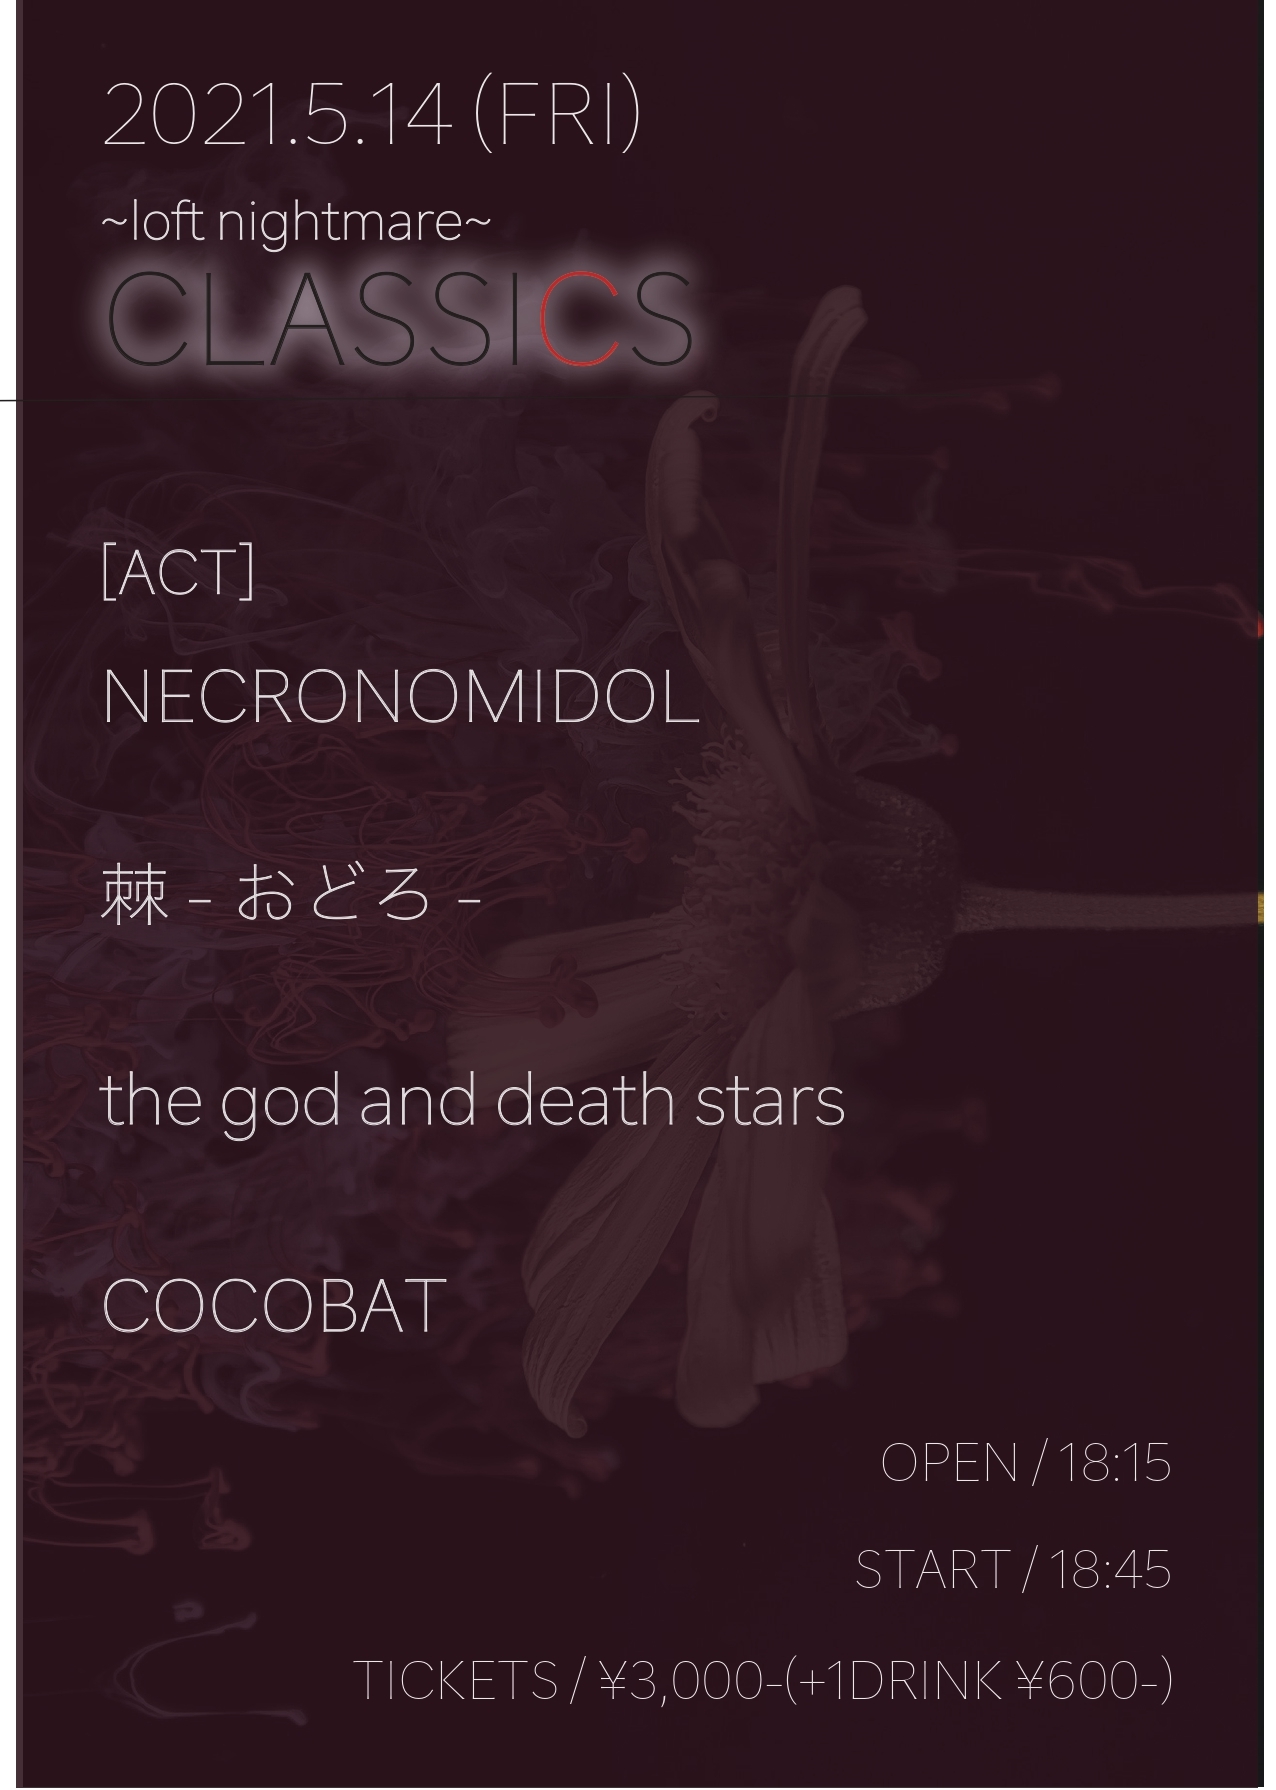 loft nightmare~CLASSICS』が開催決定 NECRONOMIDOL、棘-おどろ-、the